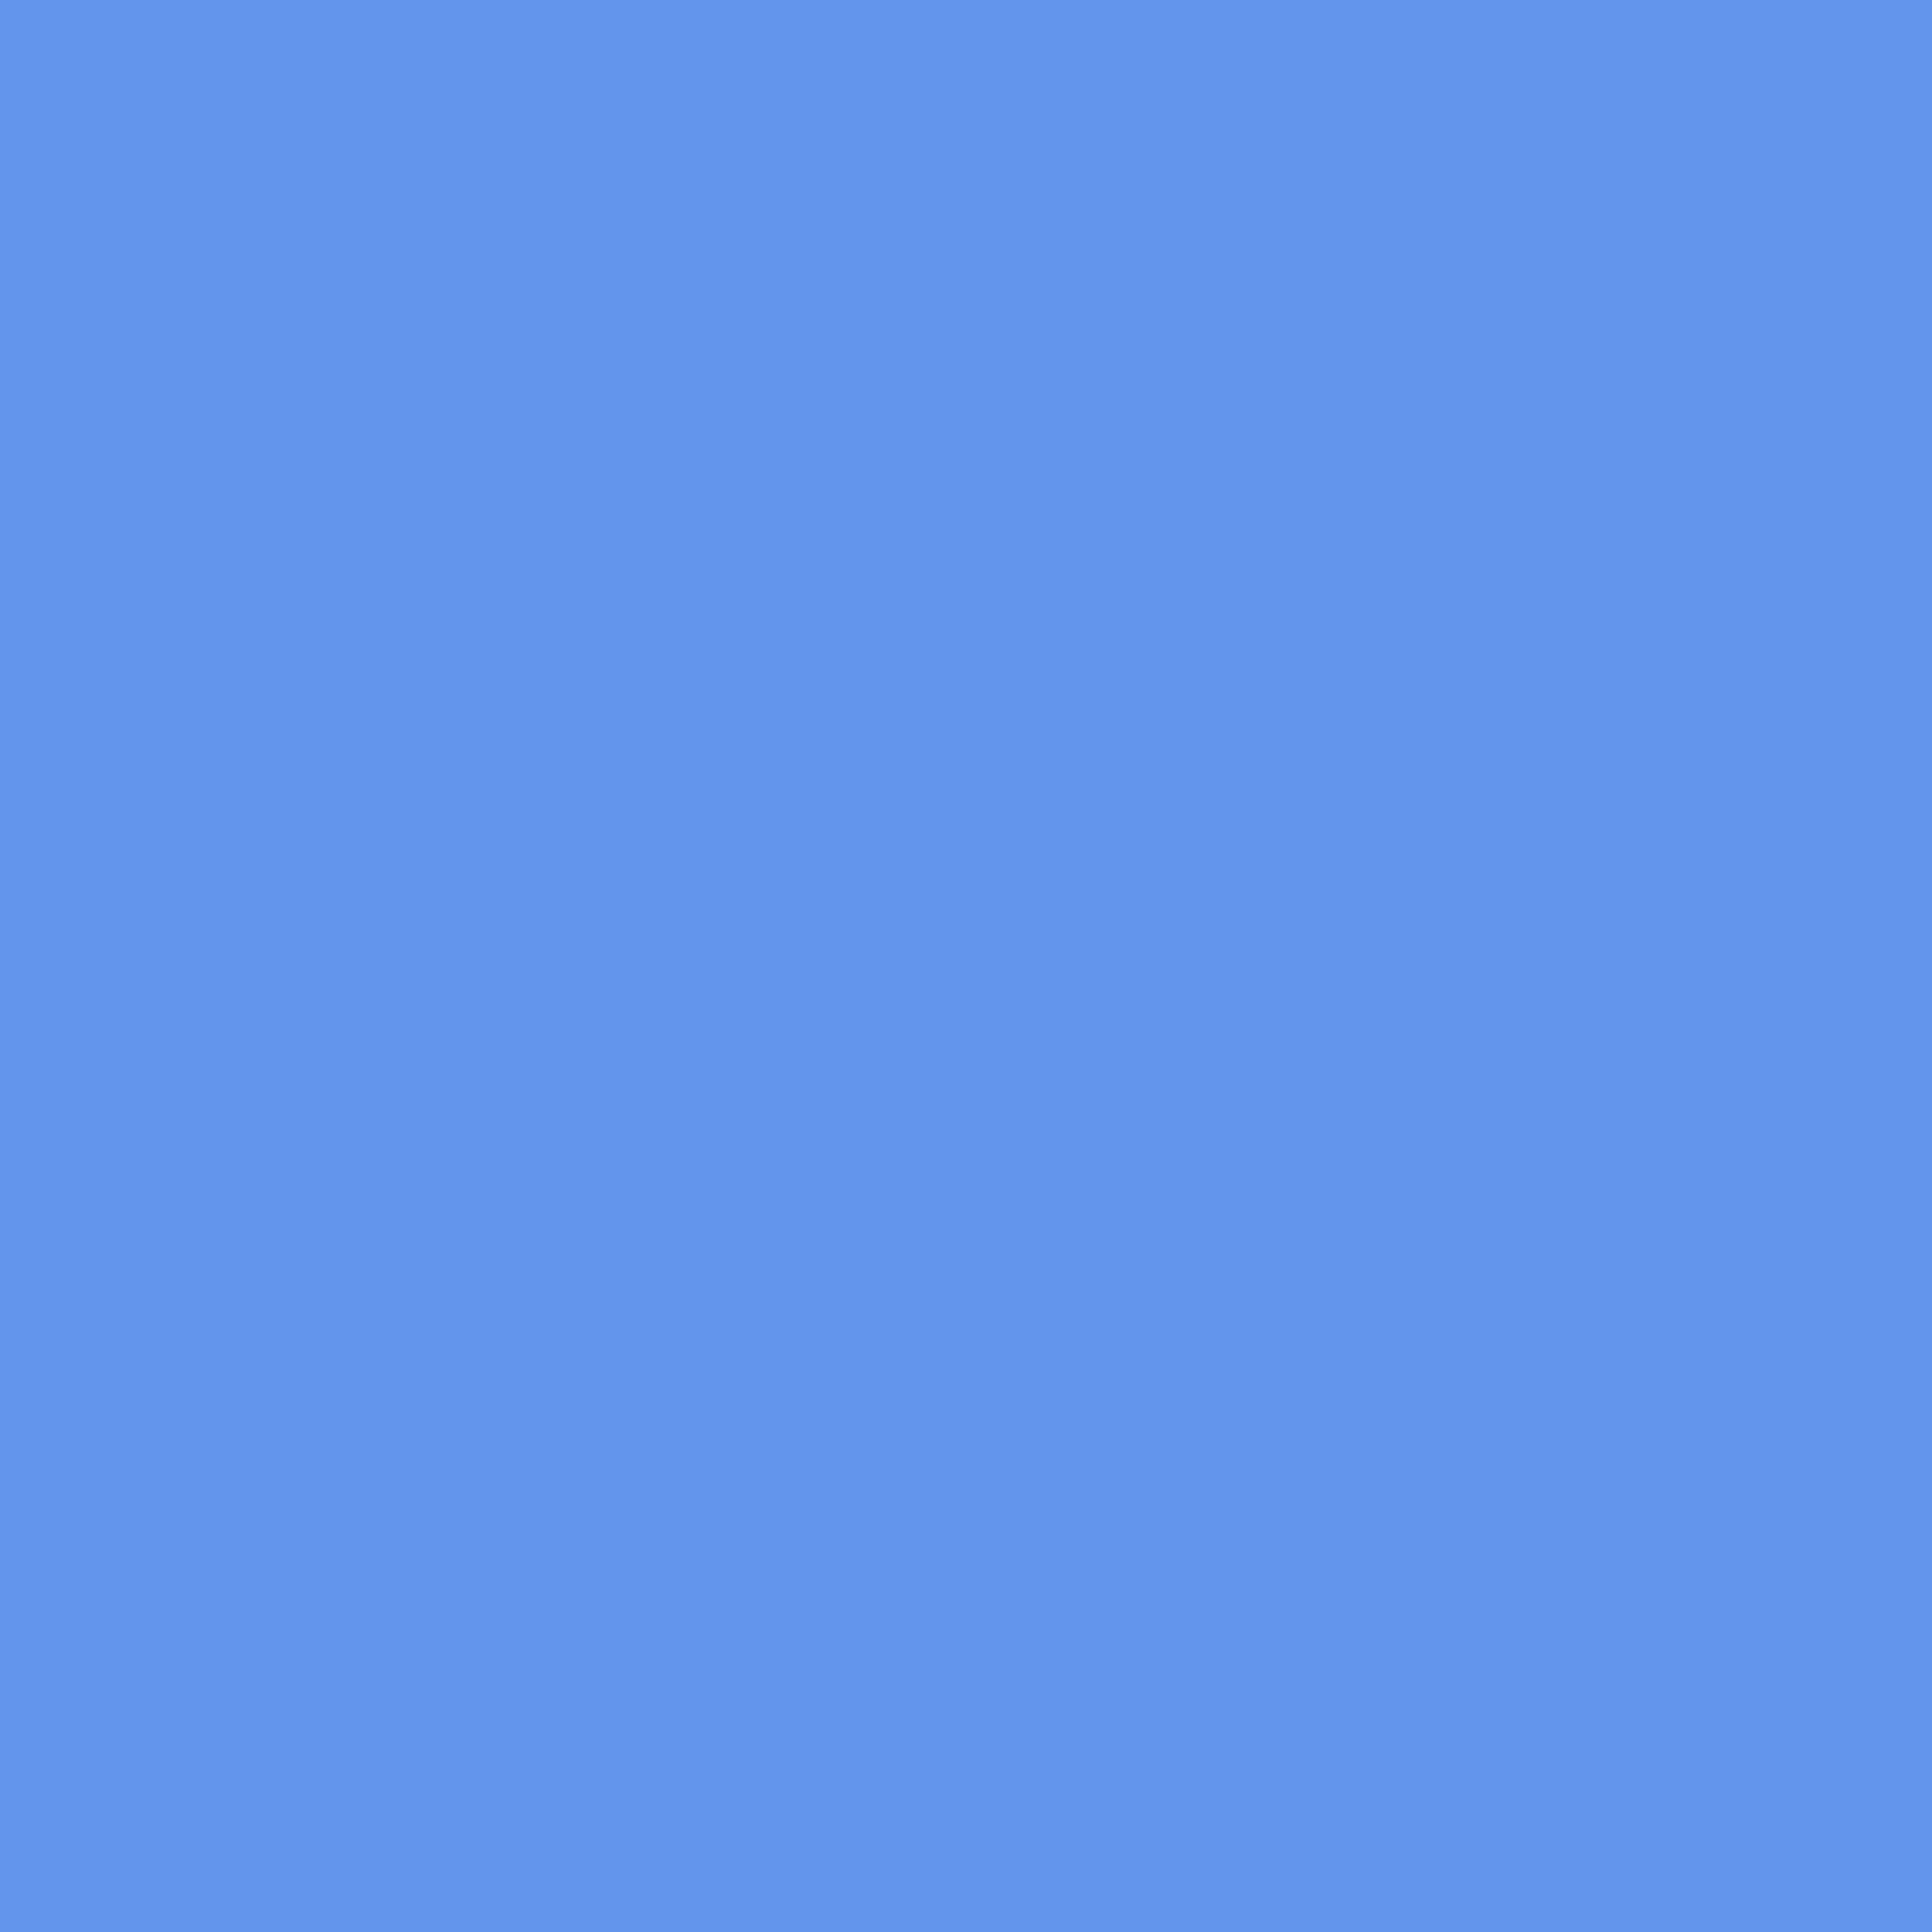 2732x2732 Cornflower Blue Solid Color Background